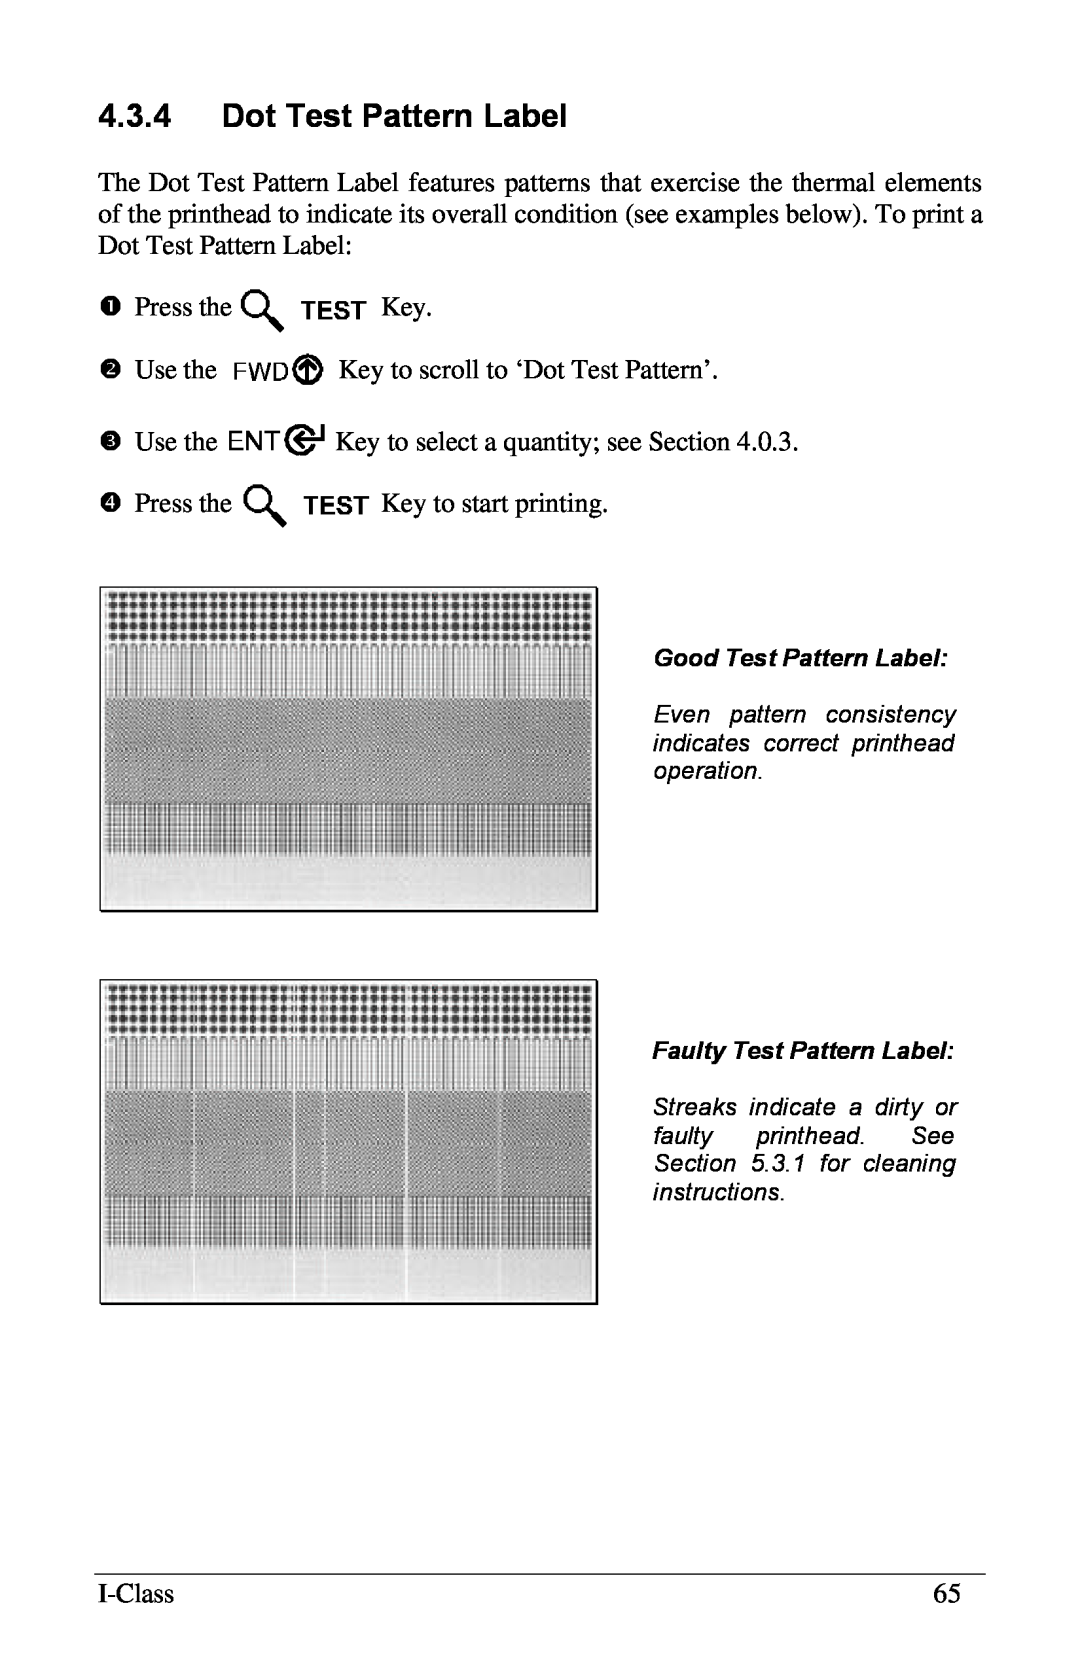 Xerox I Class manual 4.3.4Dot Test Pattern Label 